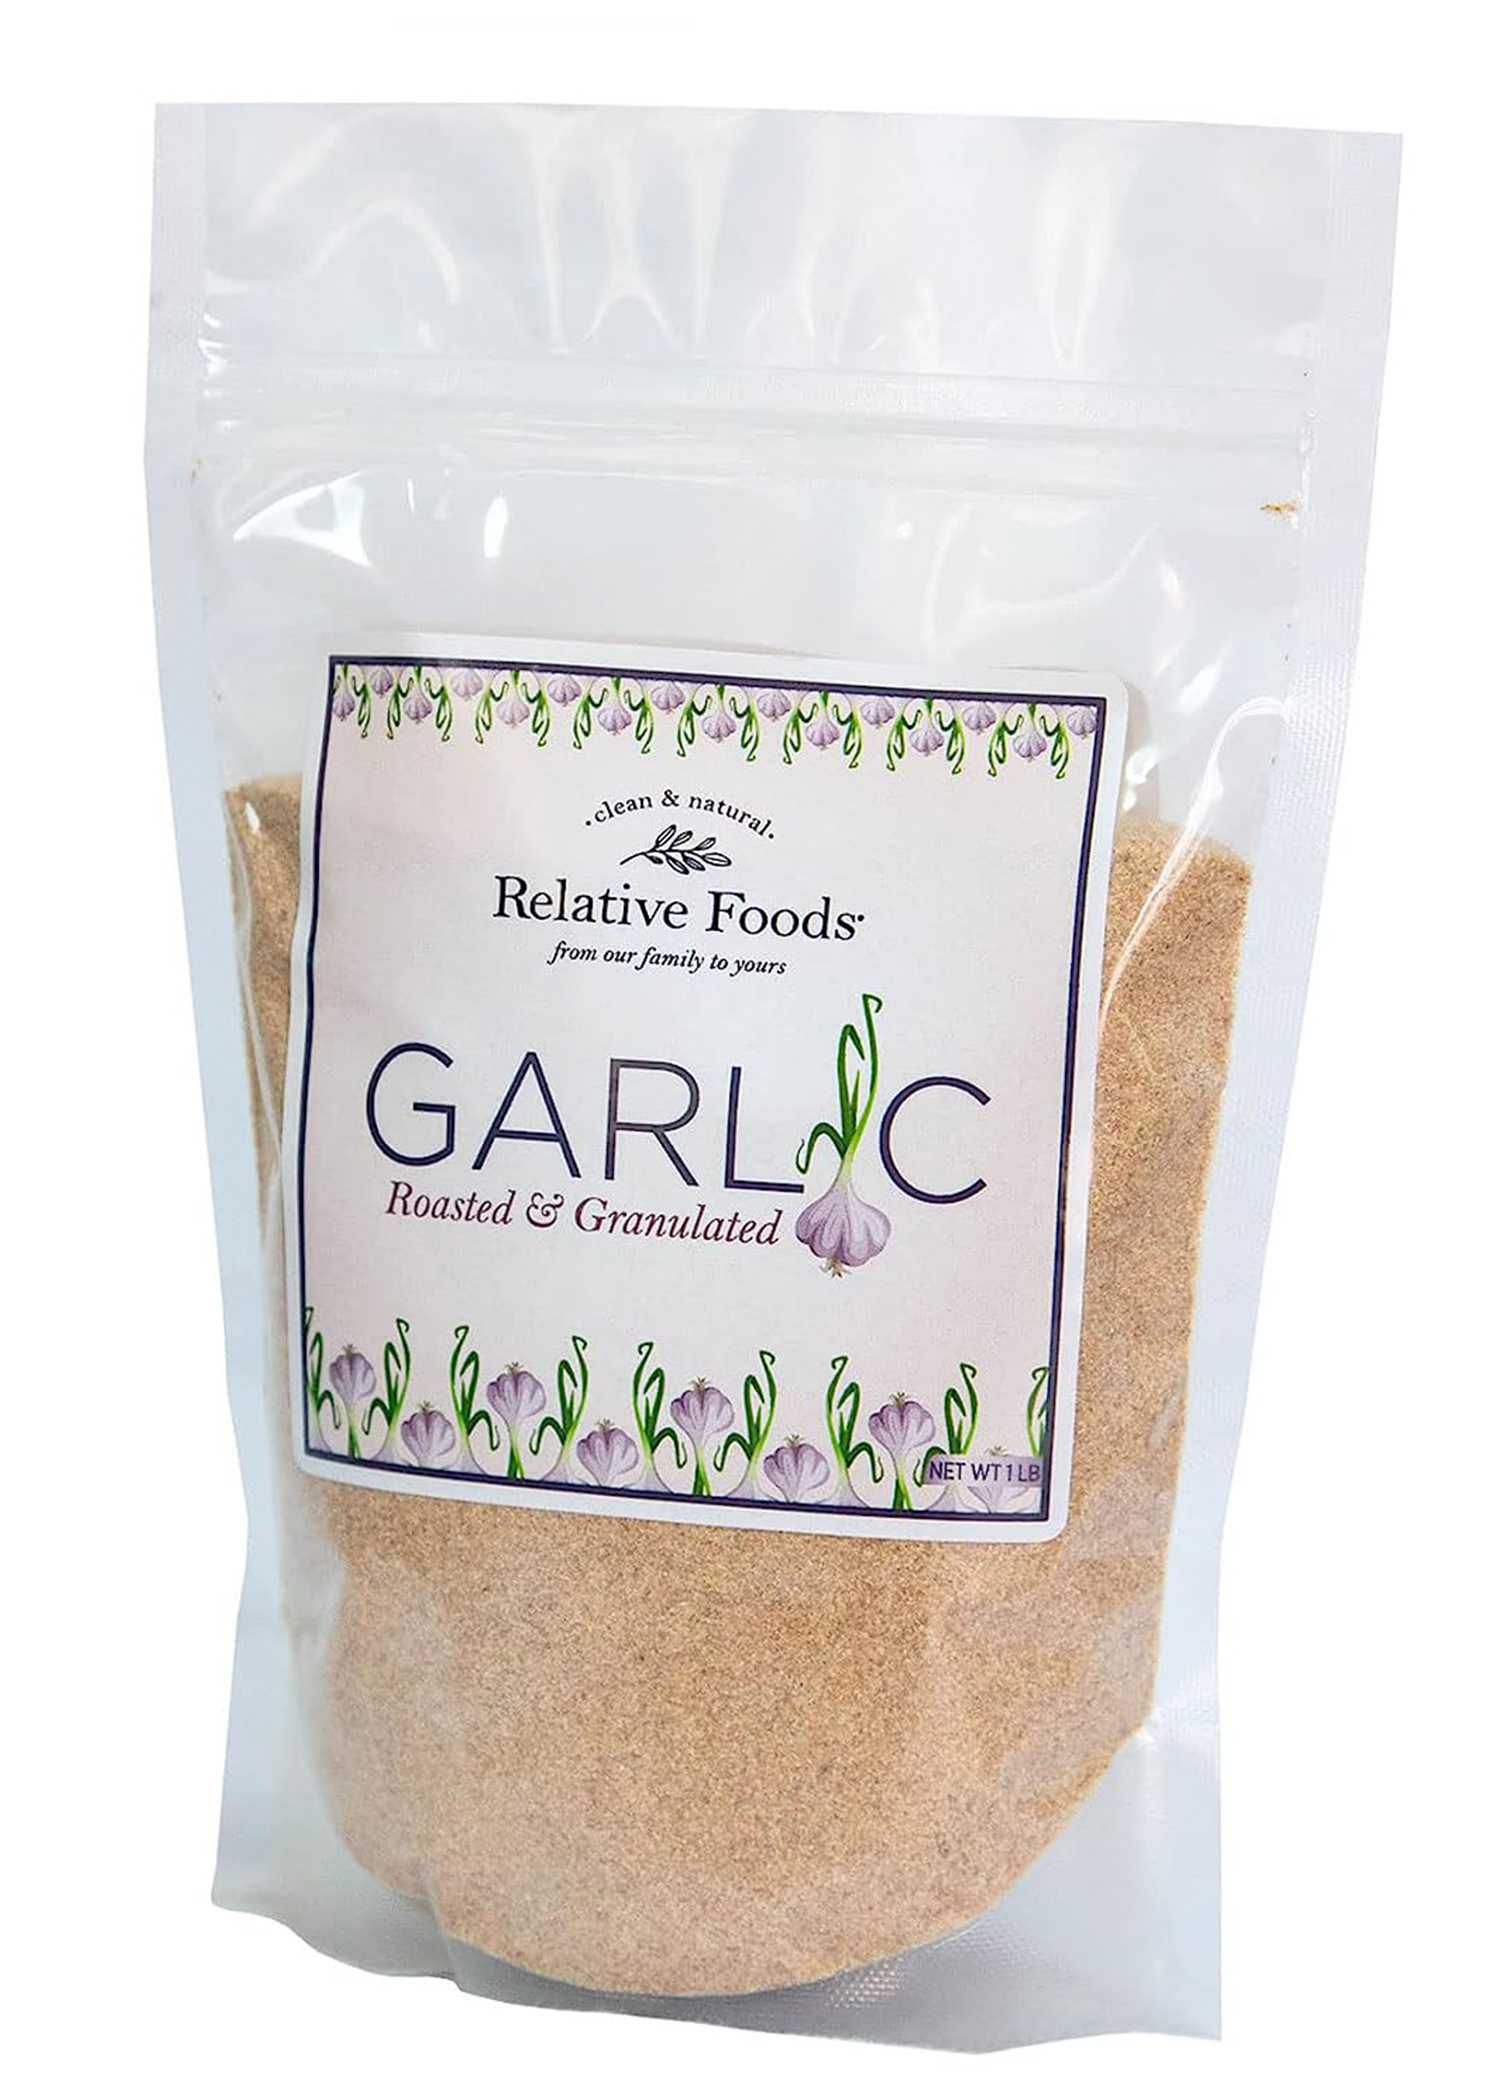 Roasted Garlic Granulated